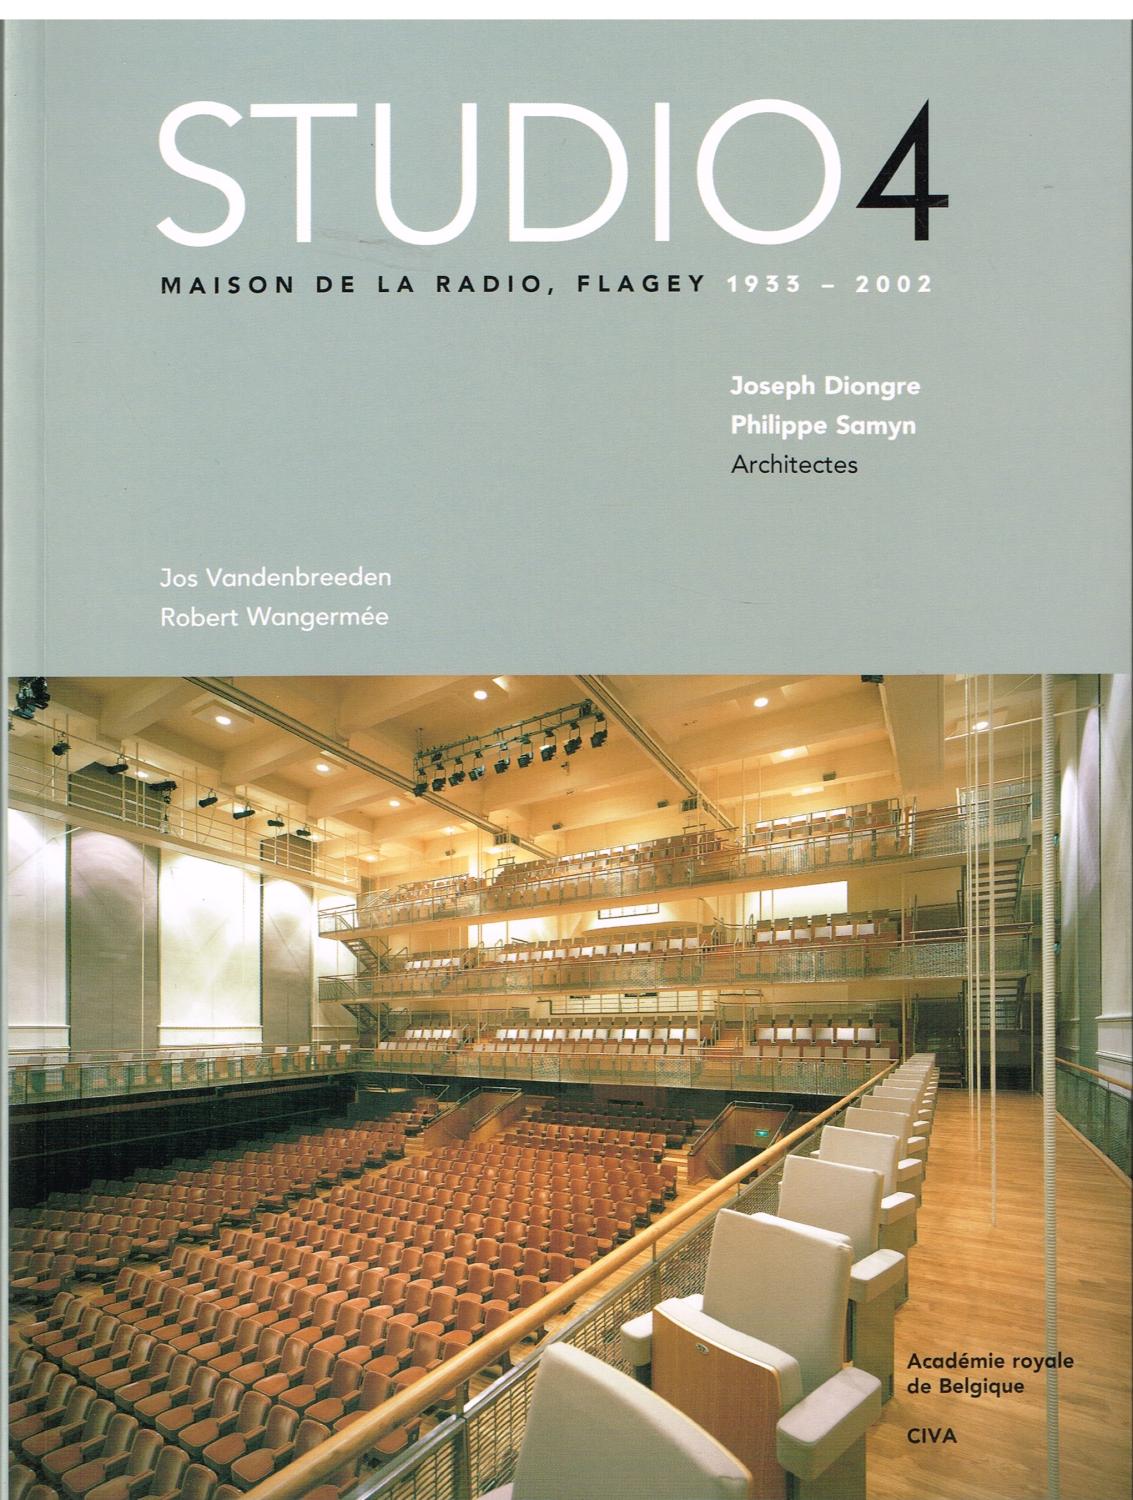 Studio 4 - Maison de la Radio Flagey/Omroepgebouw, Flagey 1933-2002: Joseph Diongre - Philippe Samyn, Architectes (NL) - Vandenbreeden, Jos; Wangermee, Robert